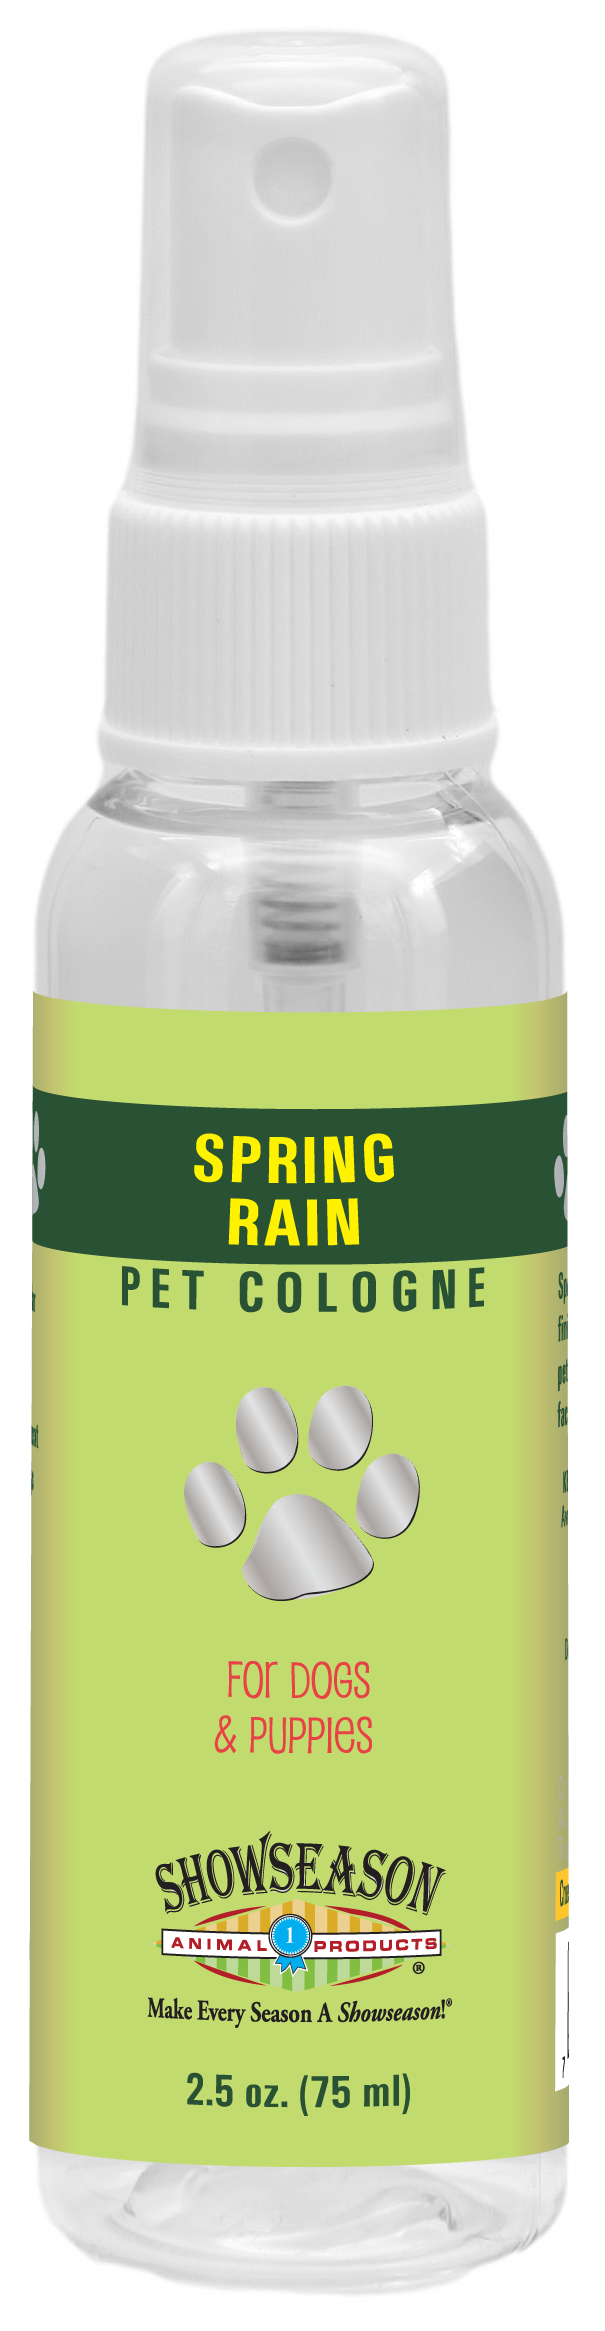 Spring Rain Pet Cologne